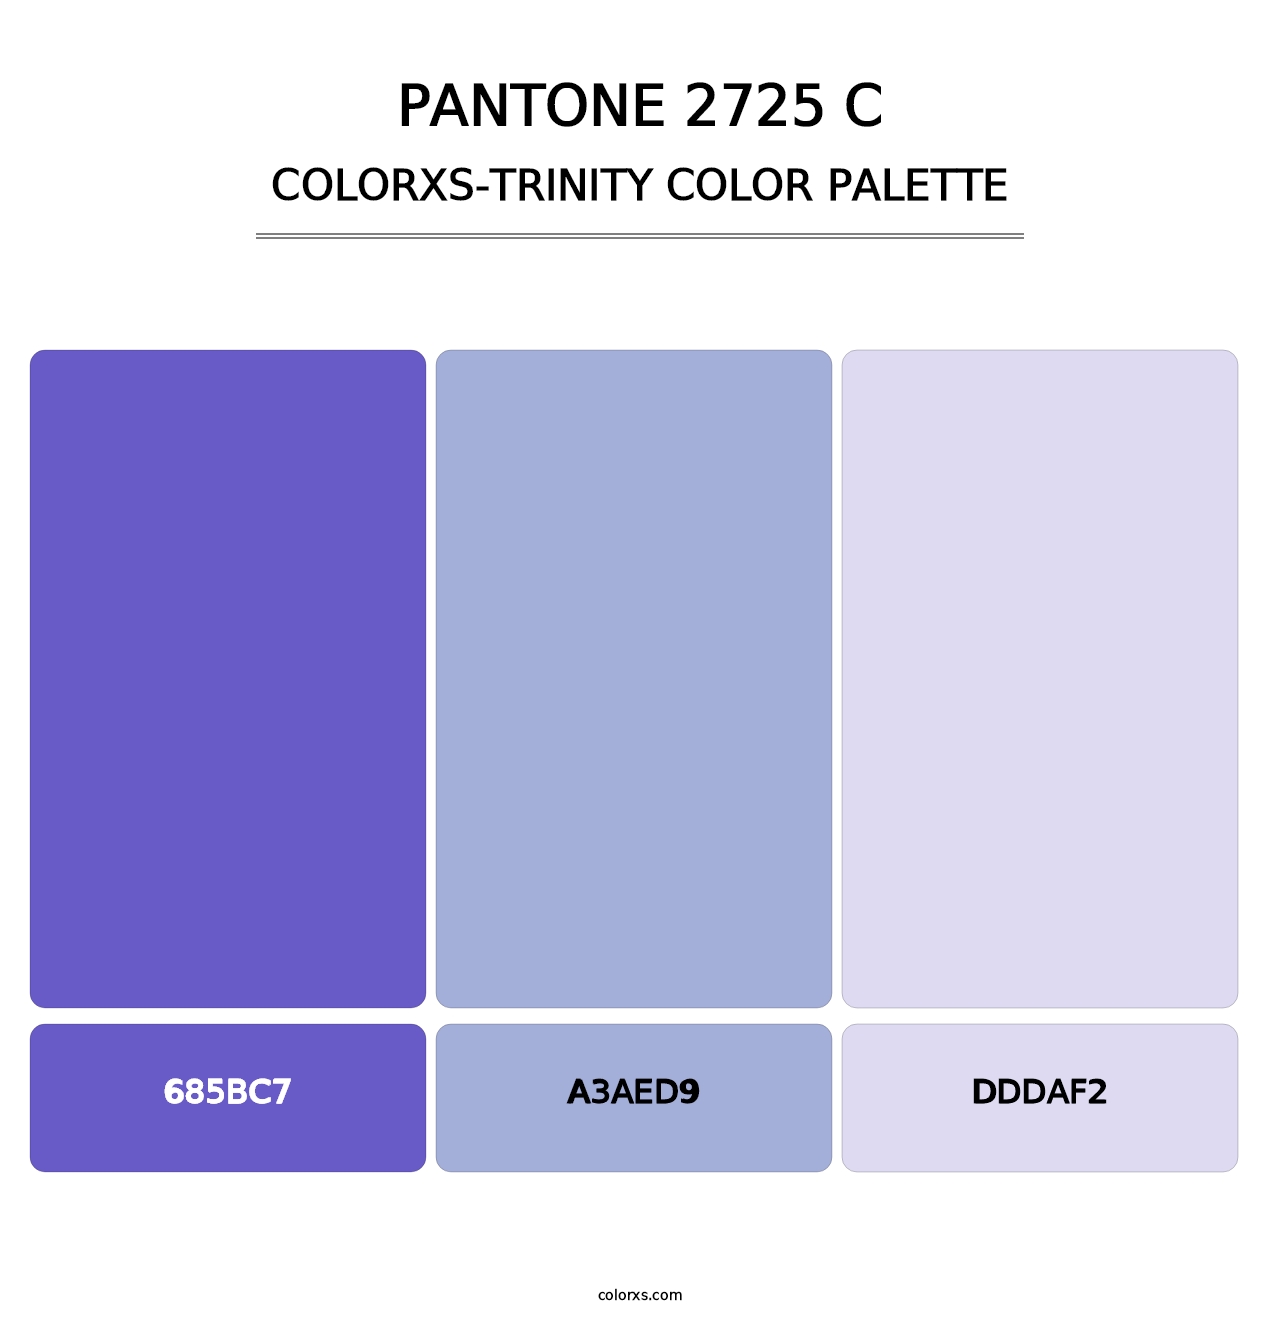 PANTONE 2725 C - Colorxs Trinity Palette